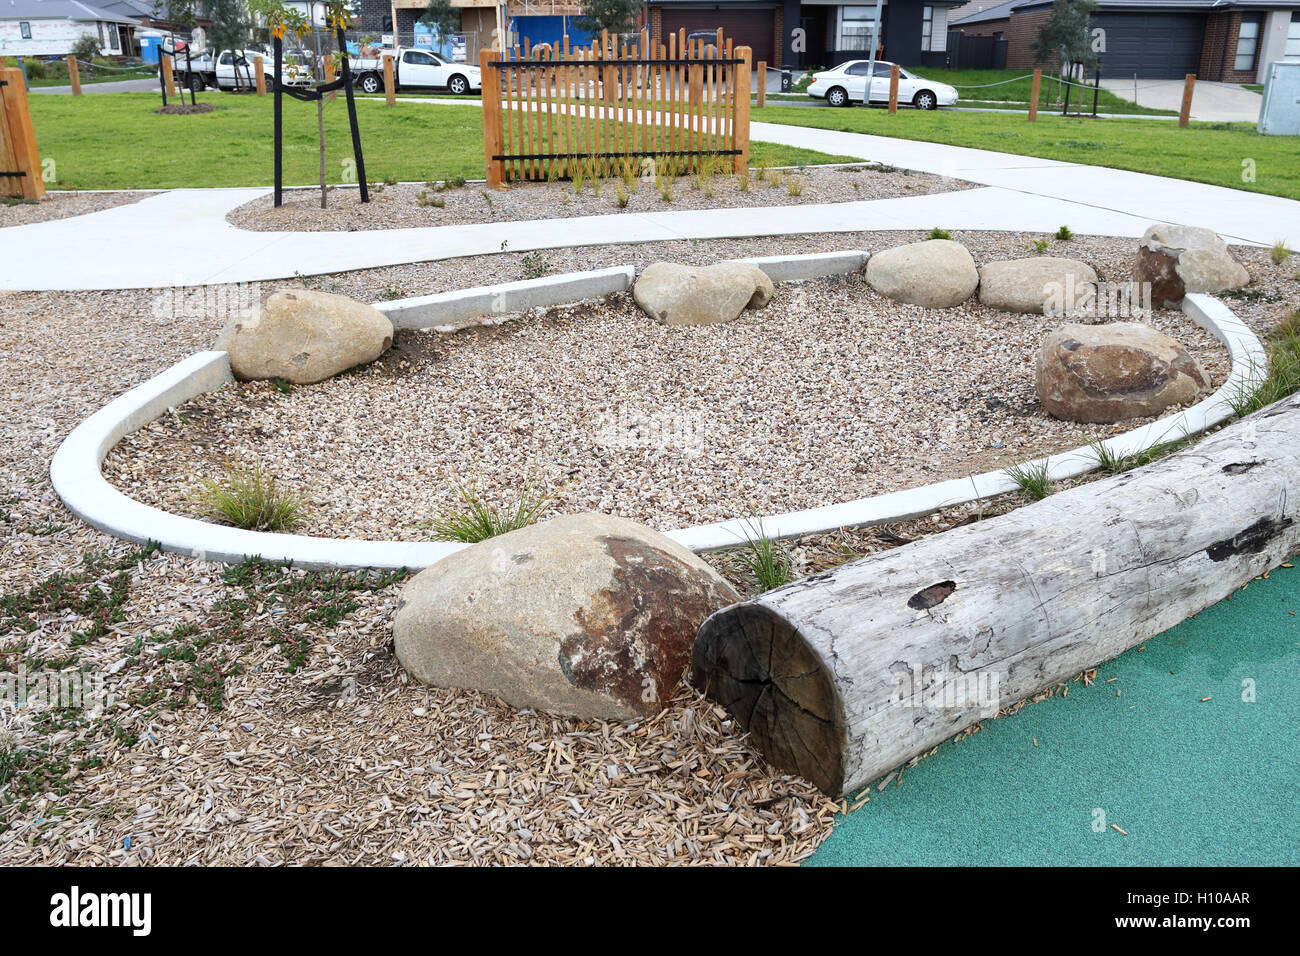 Play area for children at Megasaurus park Cranbourne East Melbourne Victoria Australia Stock Photo